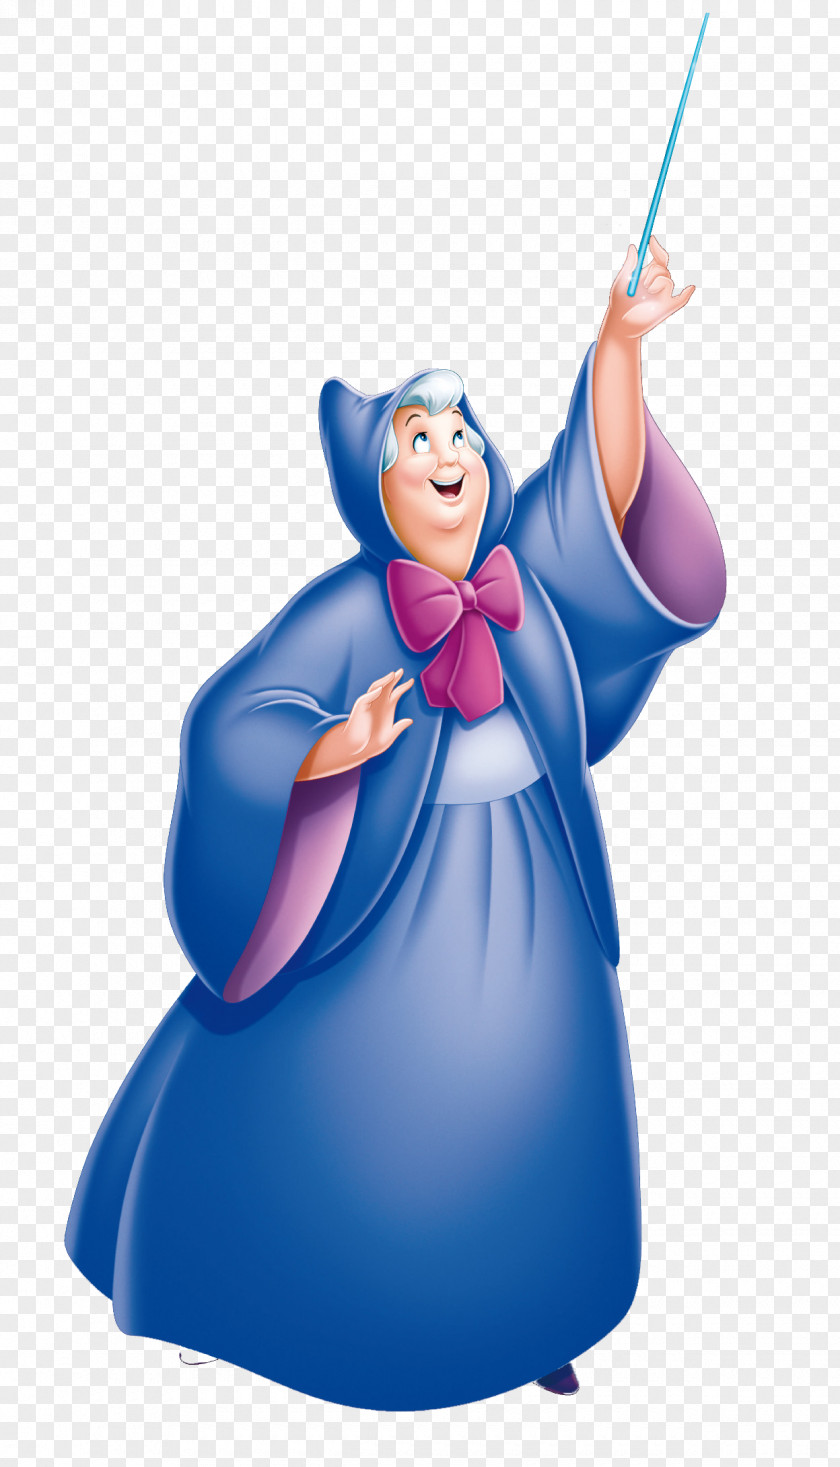 Fairy Godmother Clipart Cinderella Prince Charming Disney Fairies Tiana PNG